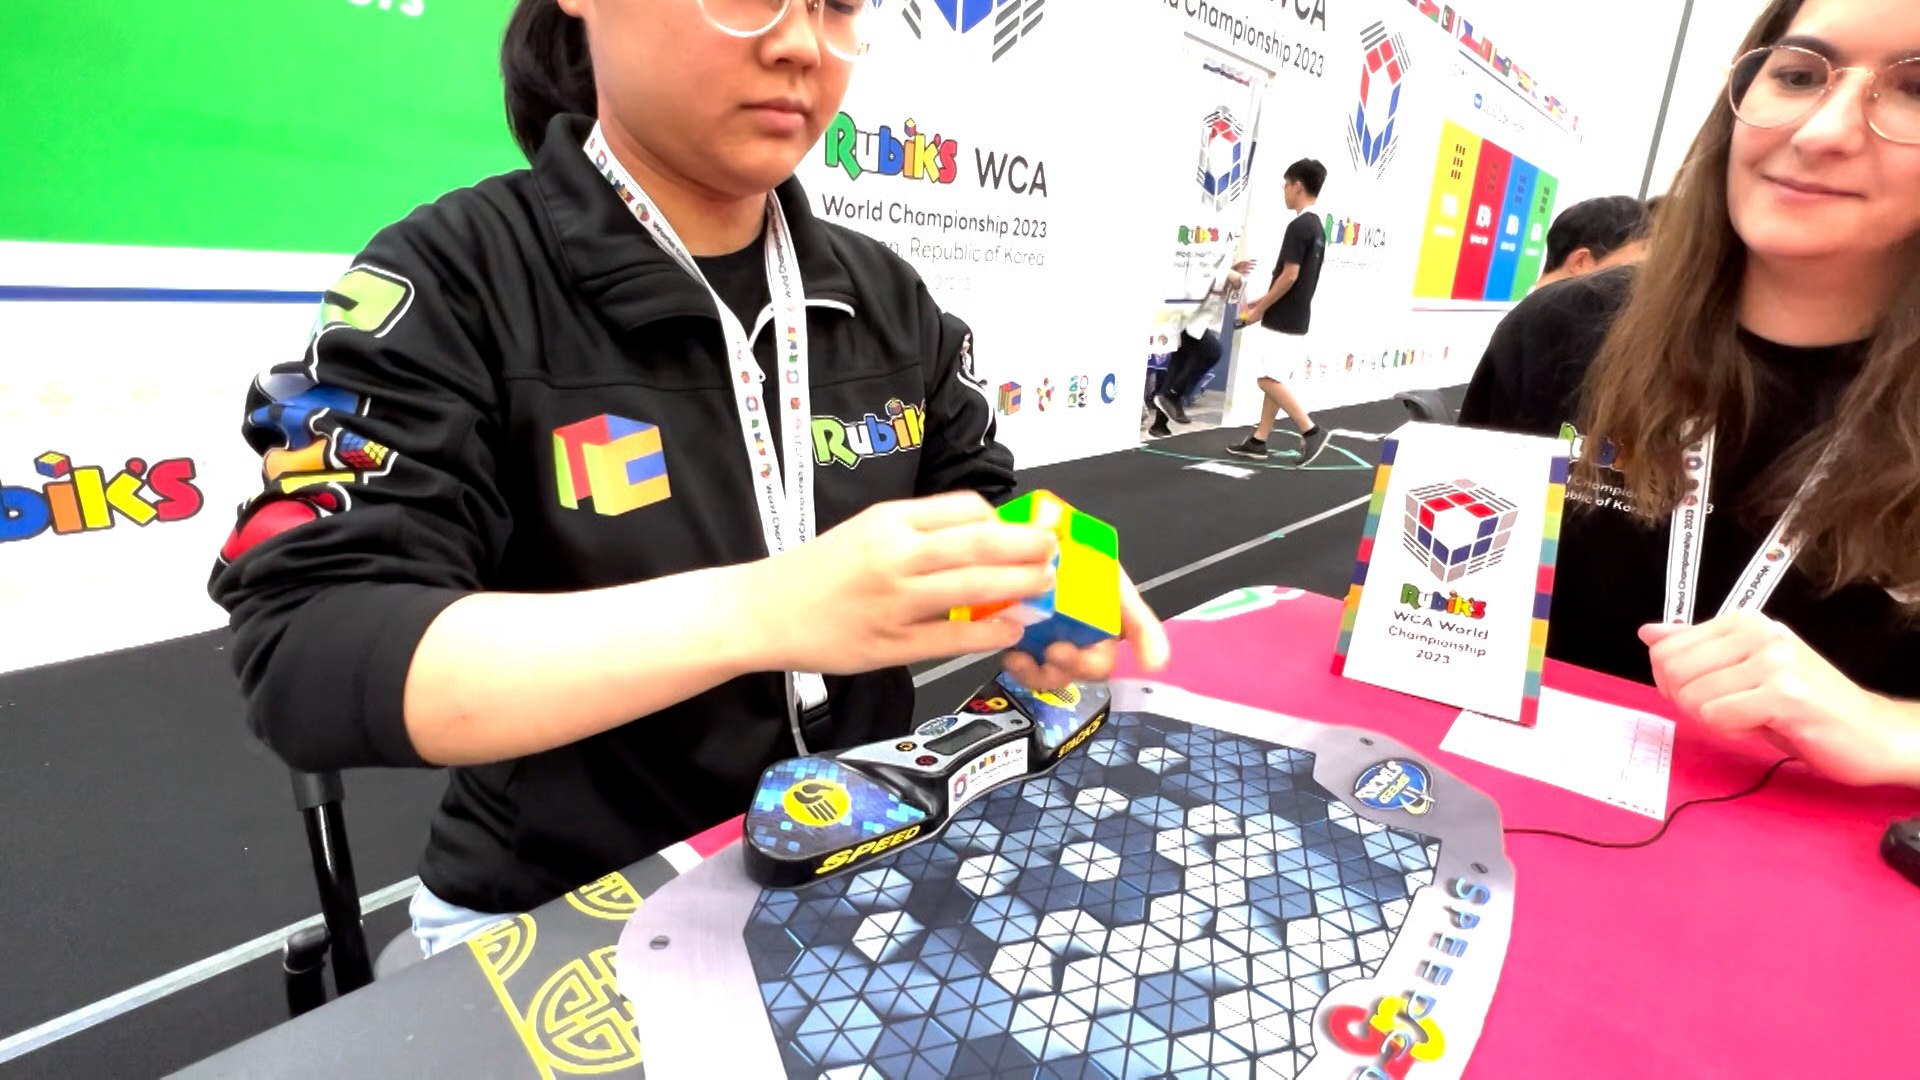 Rubik's WCA North American Championship 2022 on X: We're live